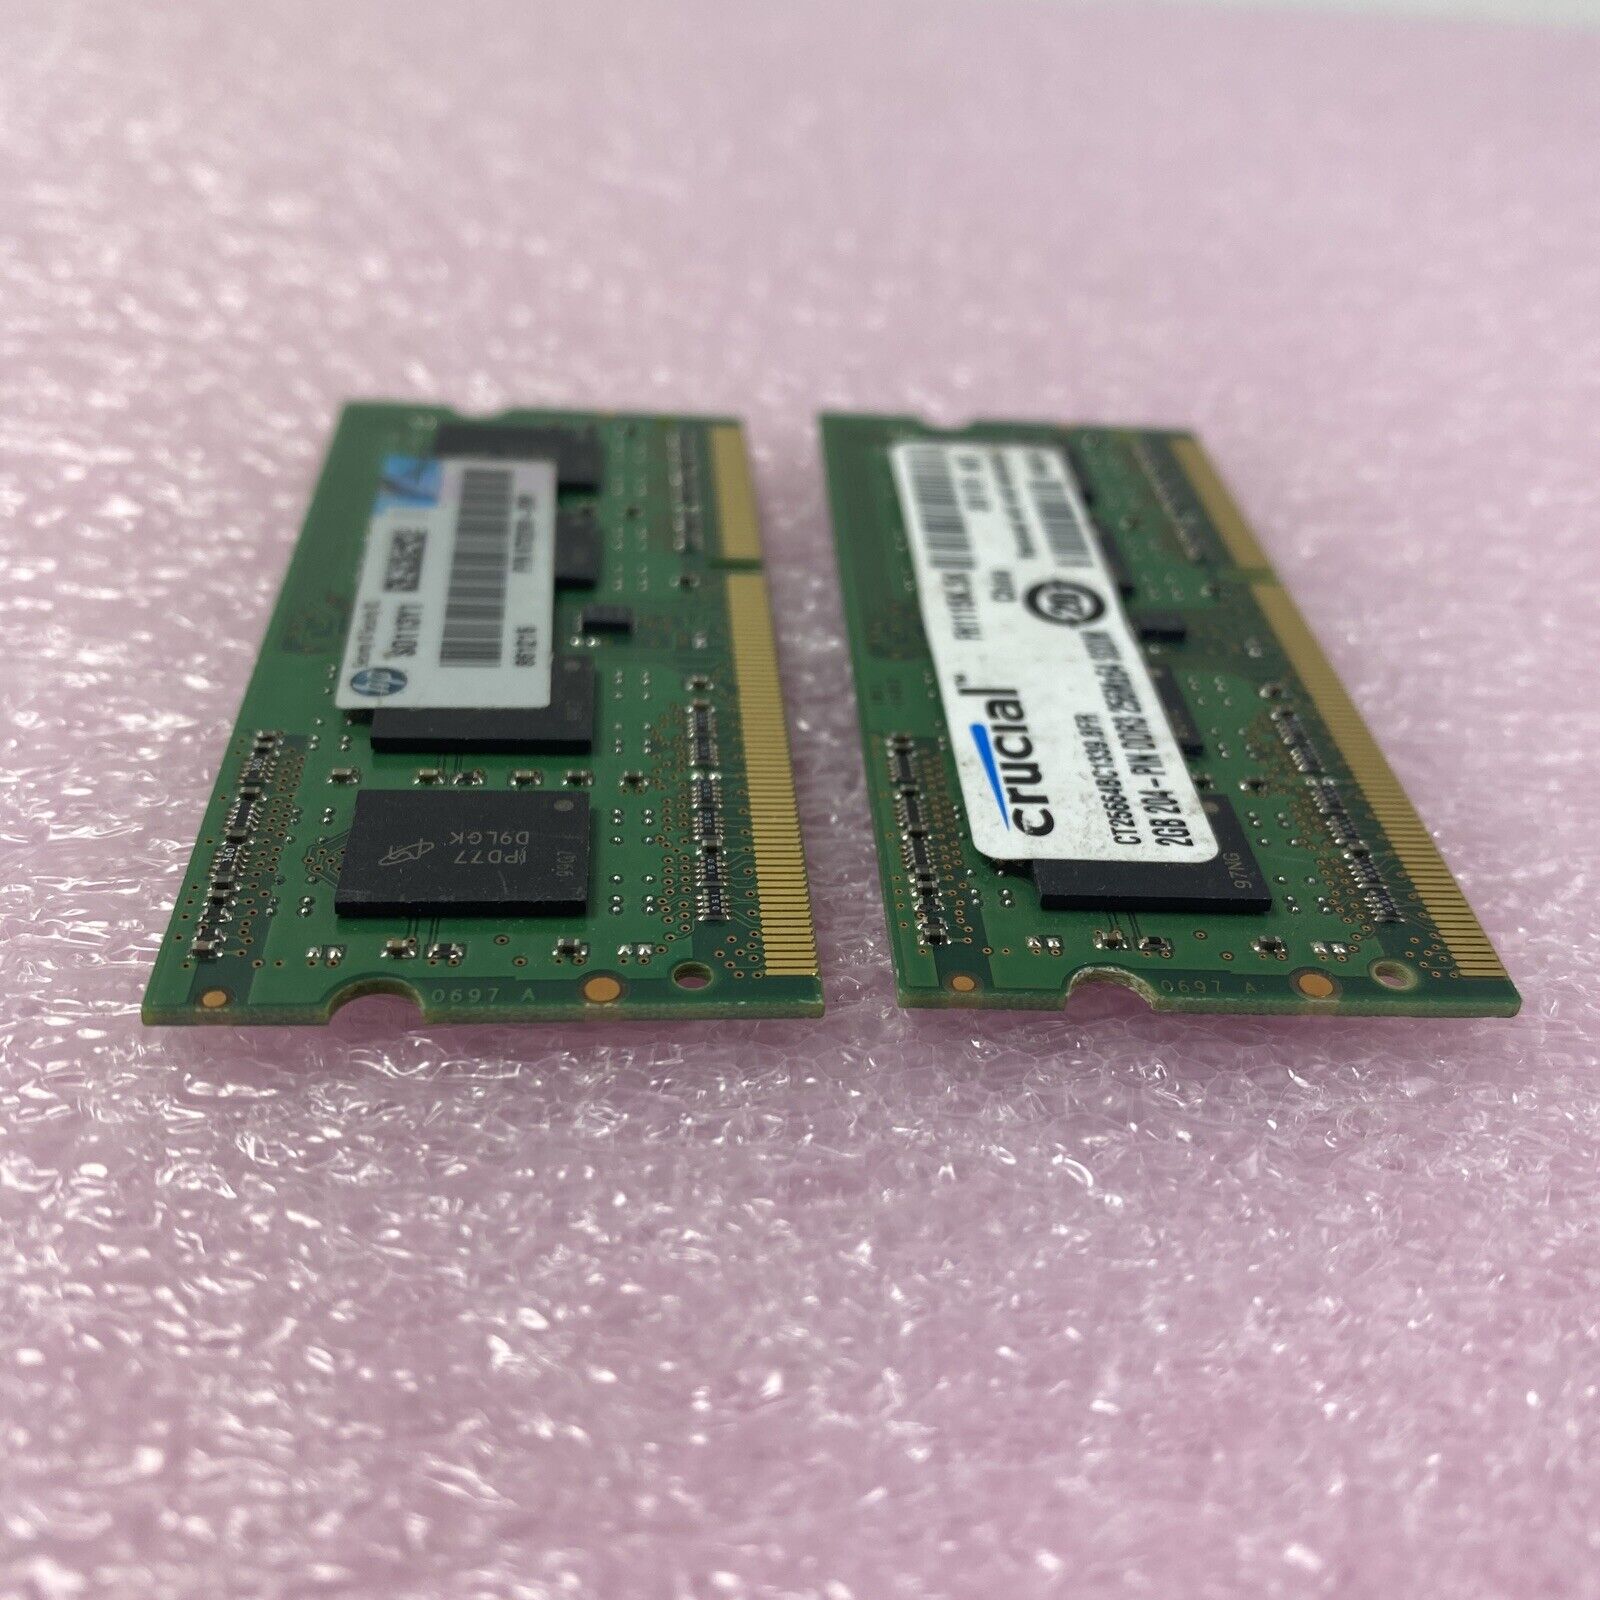 Lot( 2 ) 2GB Micron MT8JSF25664HZ-1G4D1 PC3-10600S 1333MHz DDR3 Laptop Memory